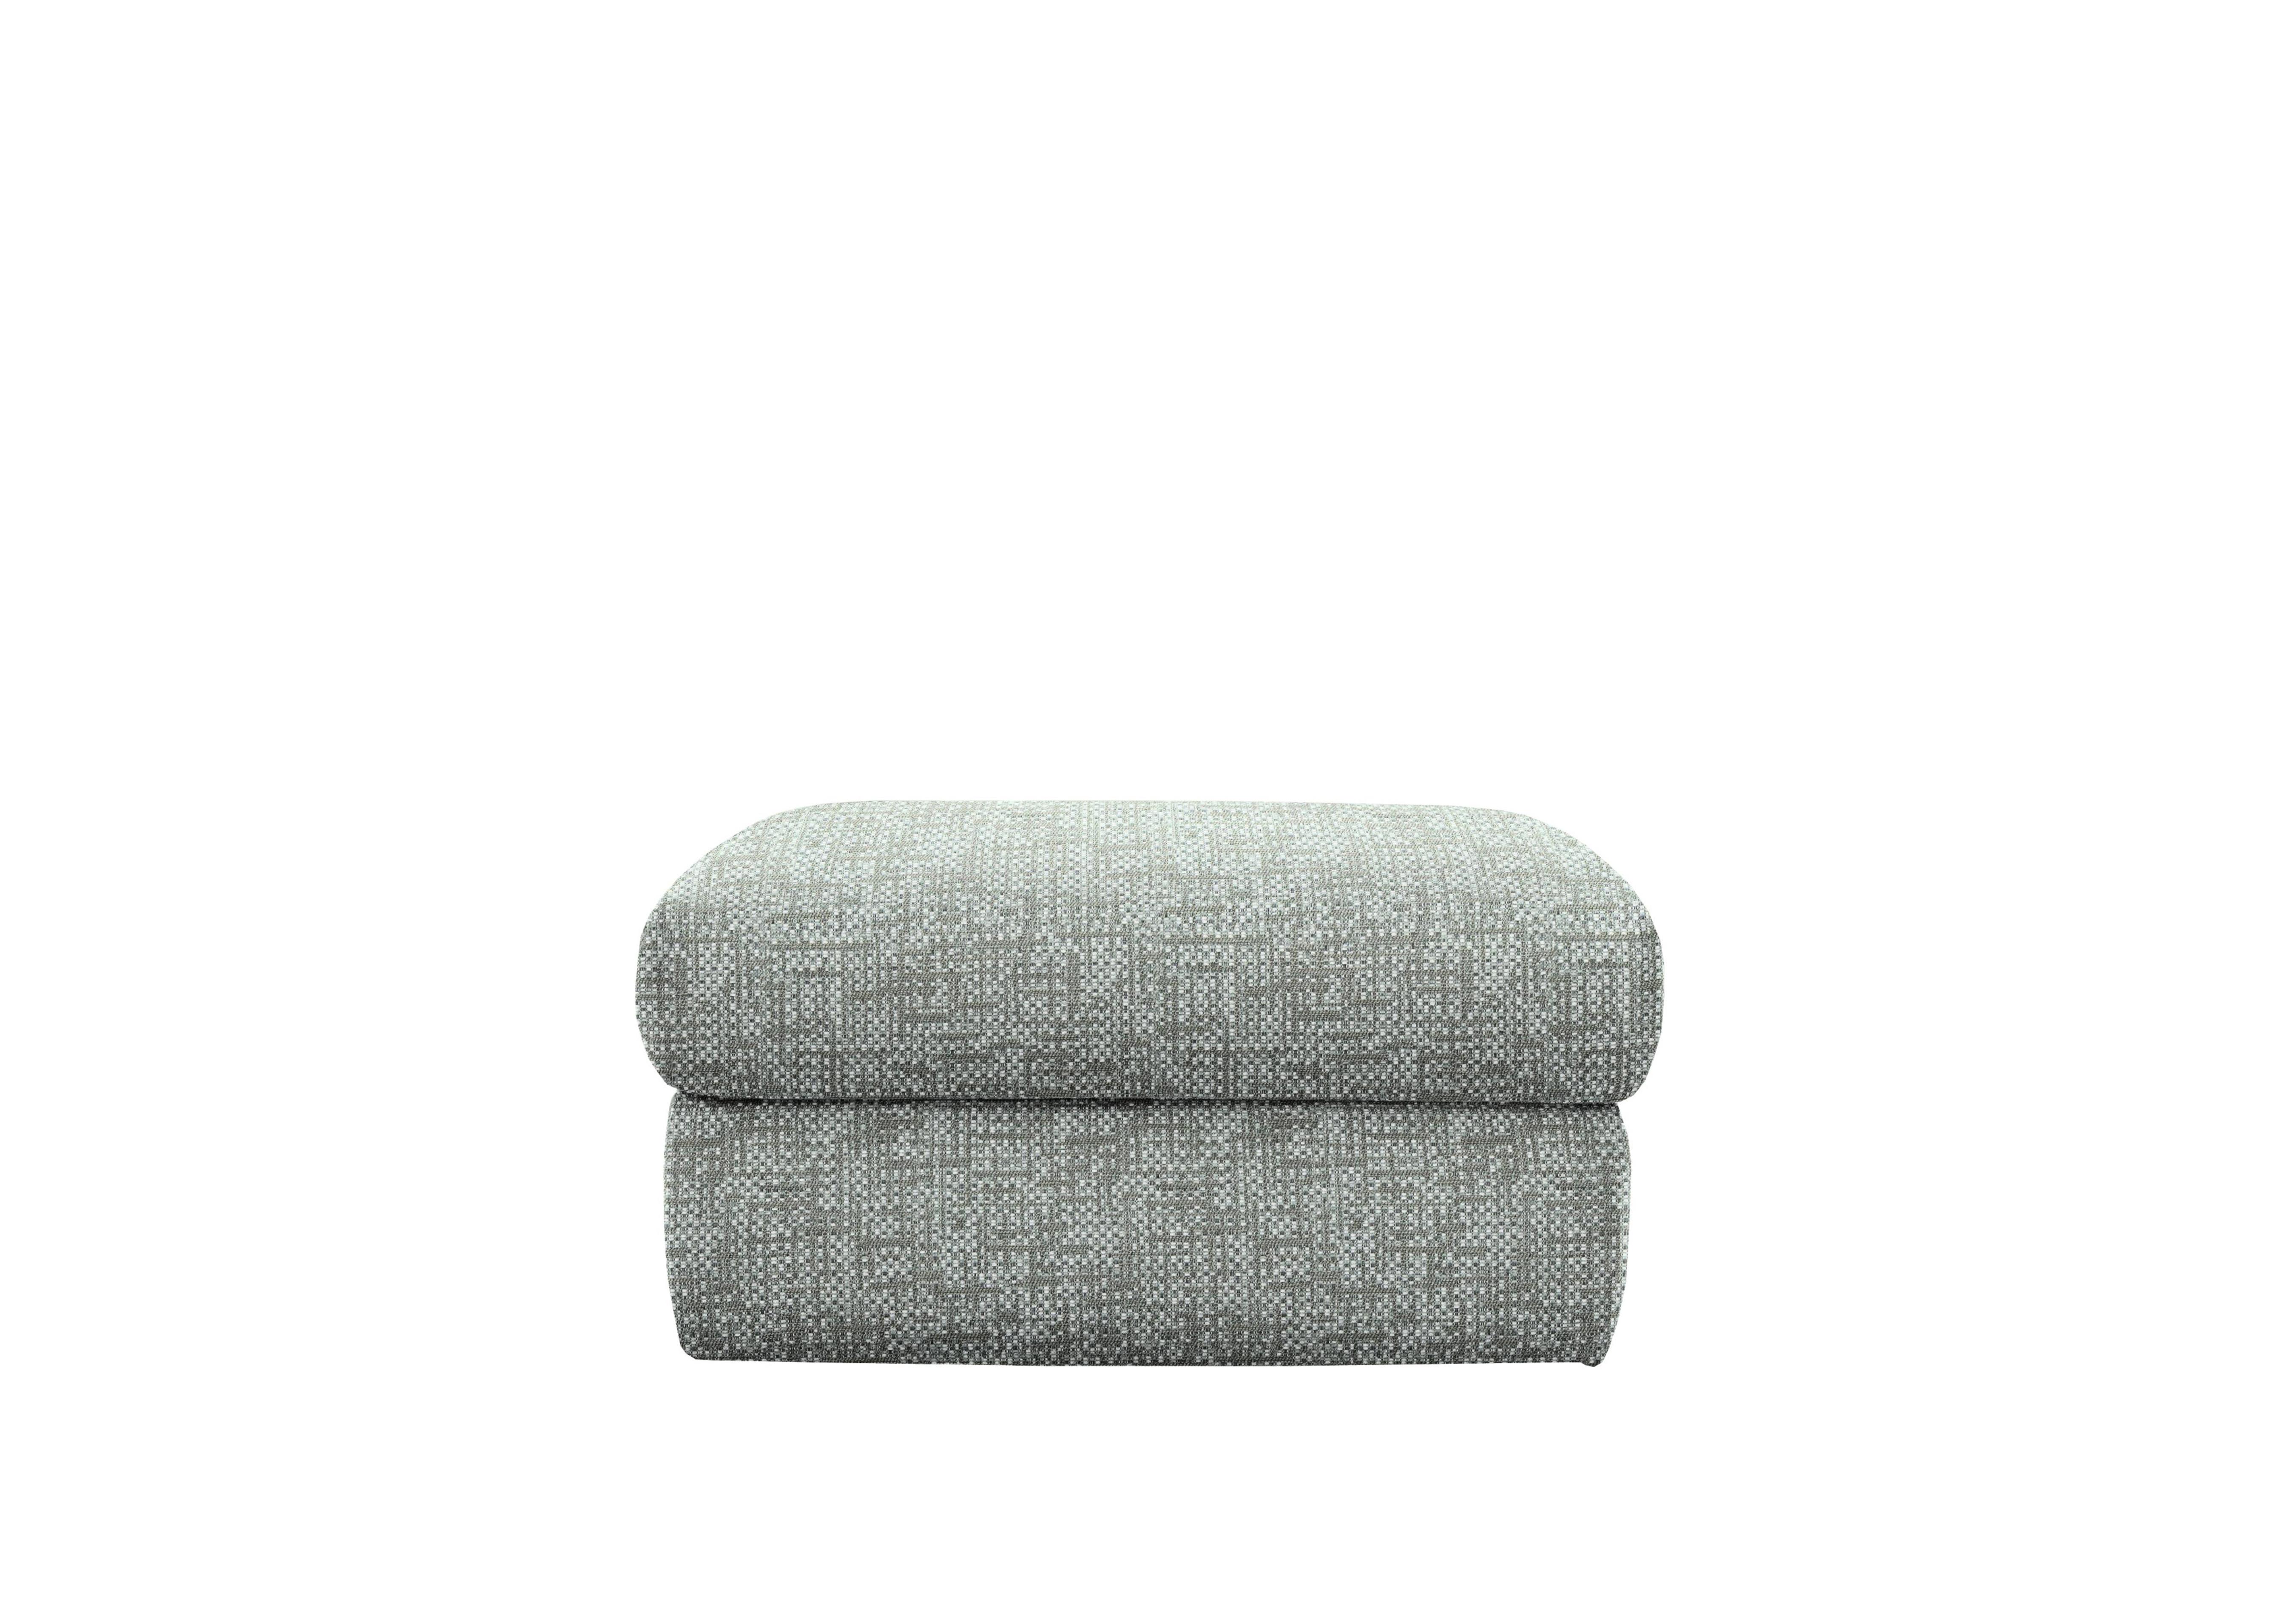 Kingsbury Fabric Storage Footstool in B032 Remco Duck Egg on Furniture Village